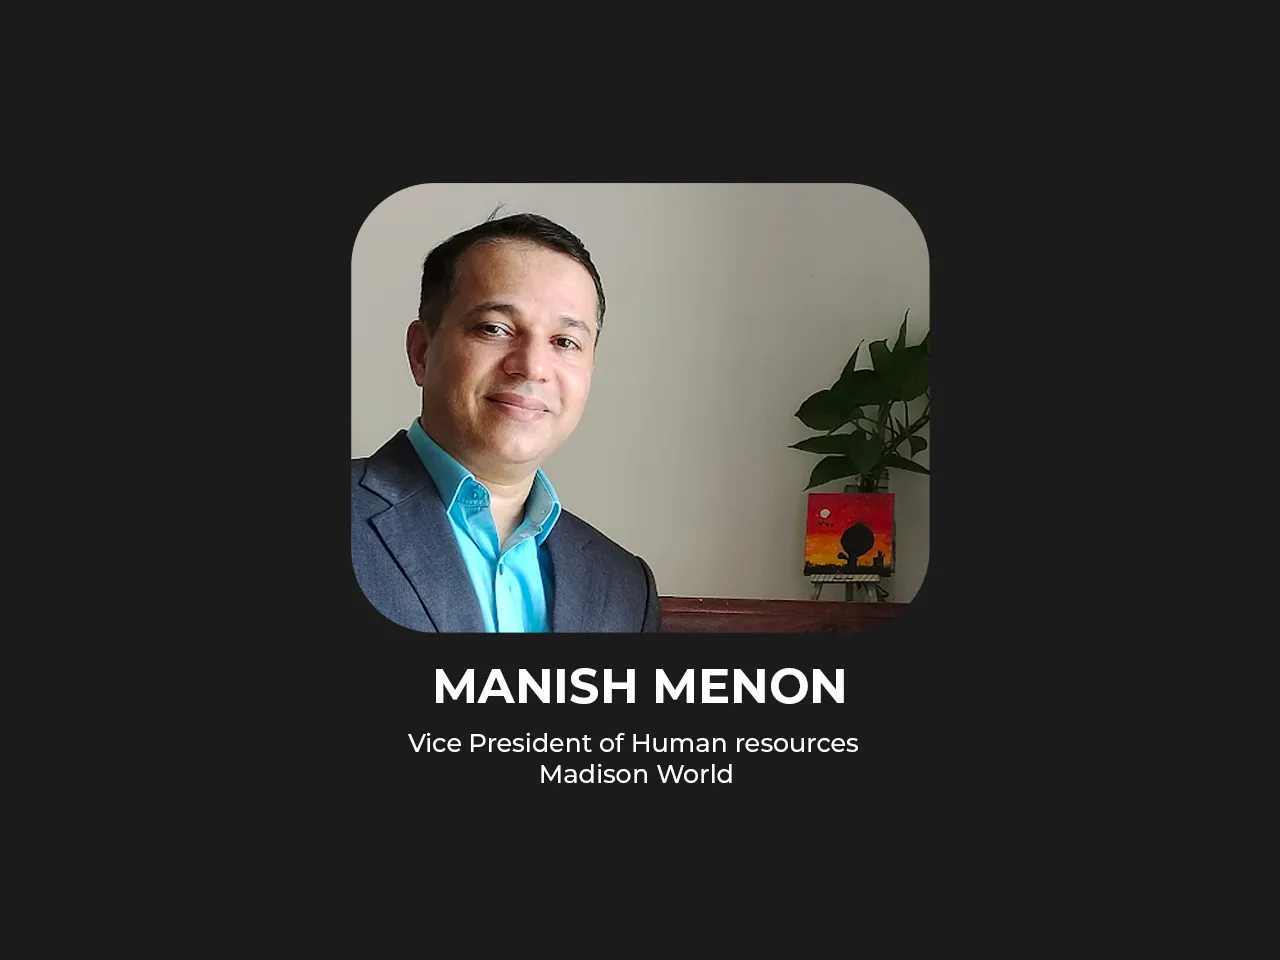 Manish Menon joins Madison World to Head Human Resources